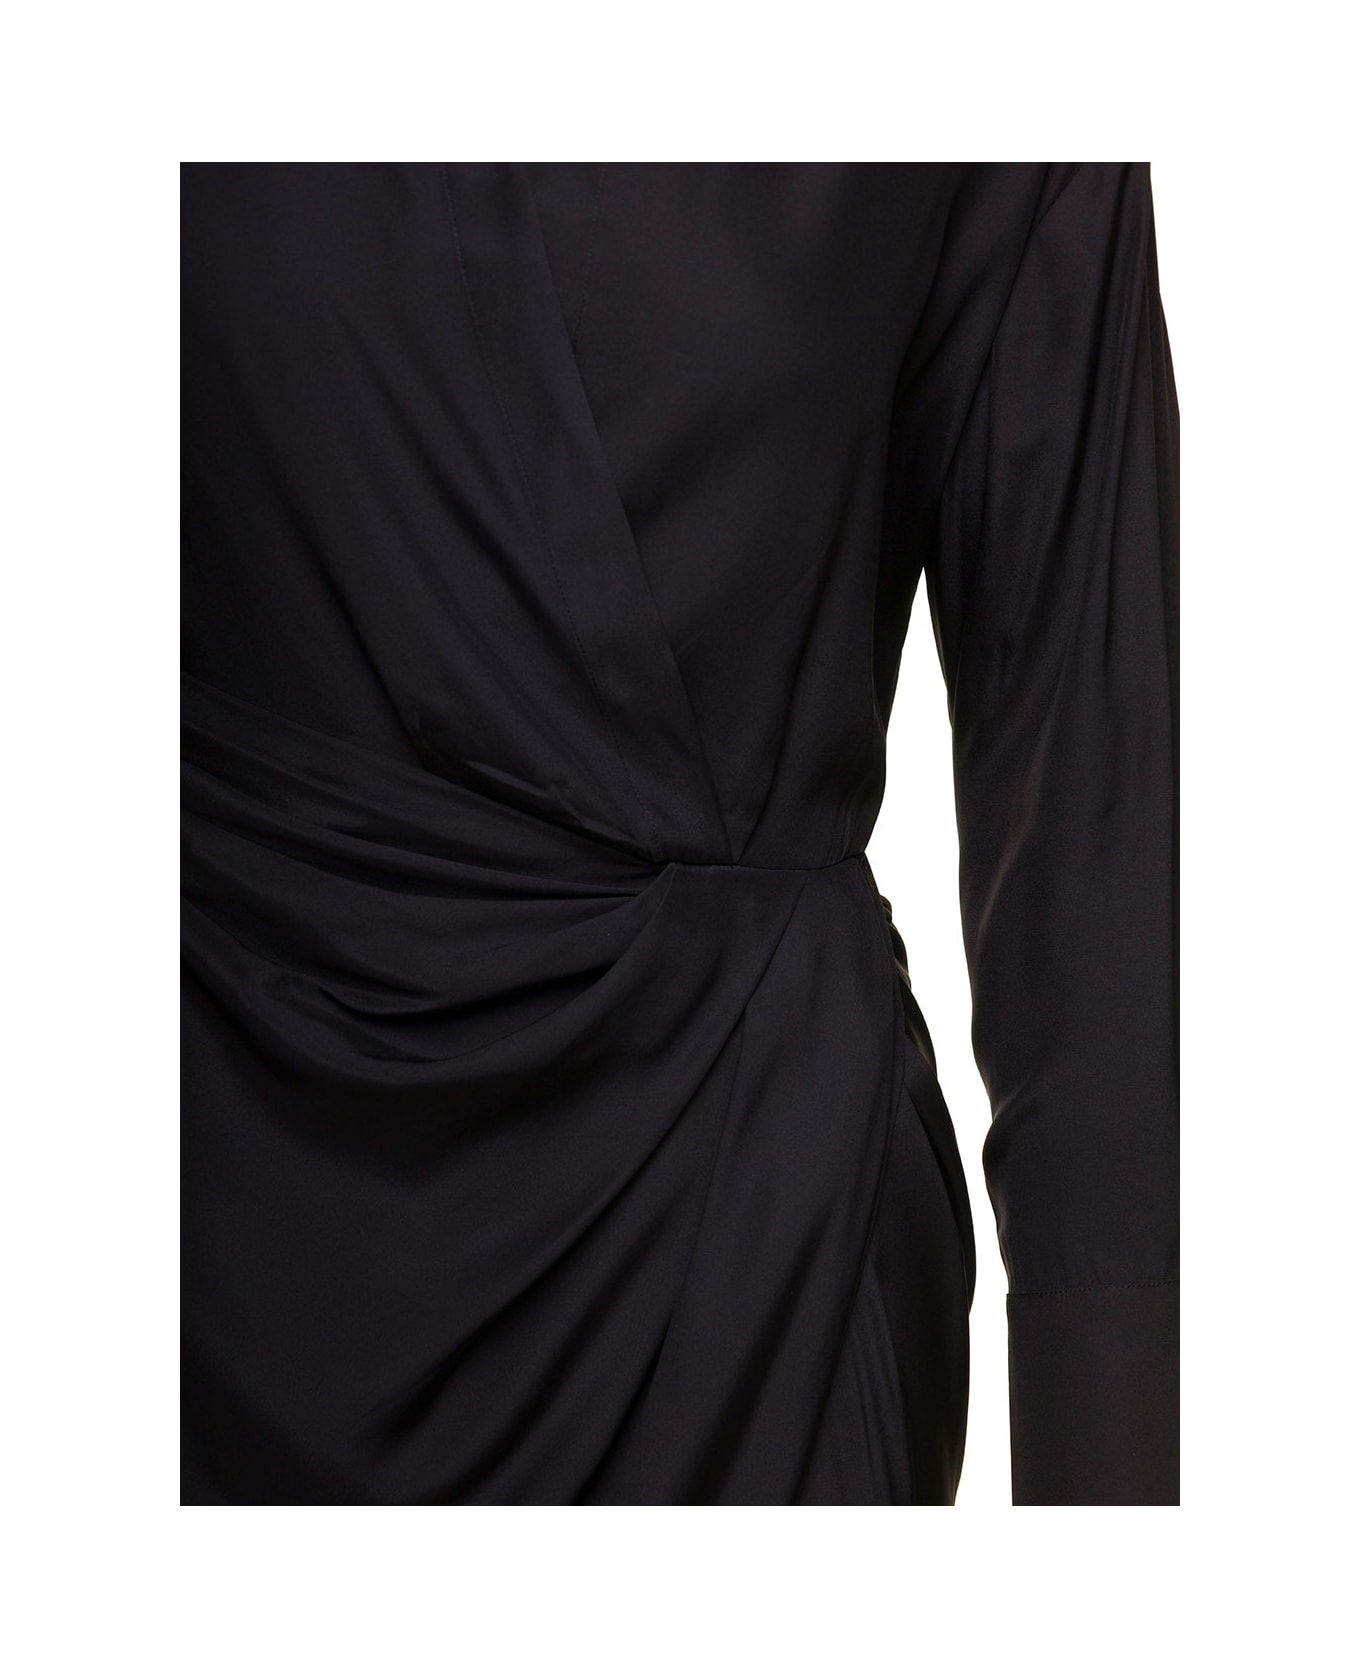 GAUGE81 Black Gathered-front Shirt Dress Woman